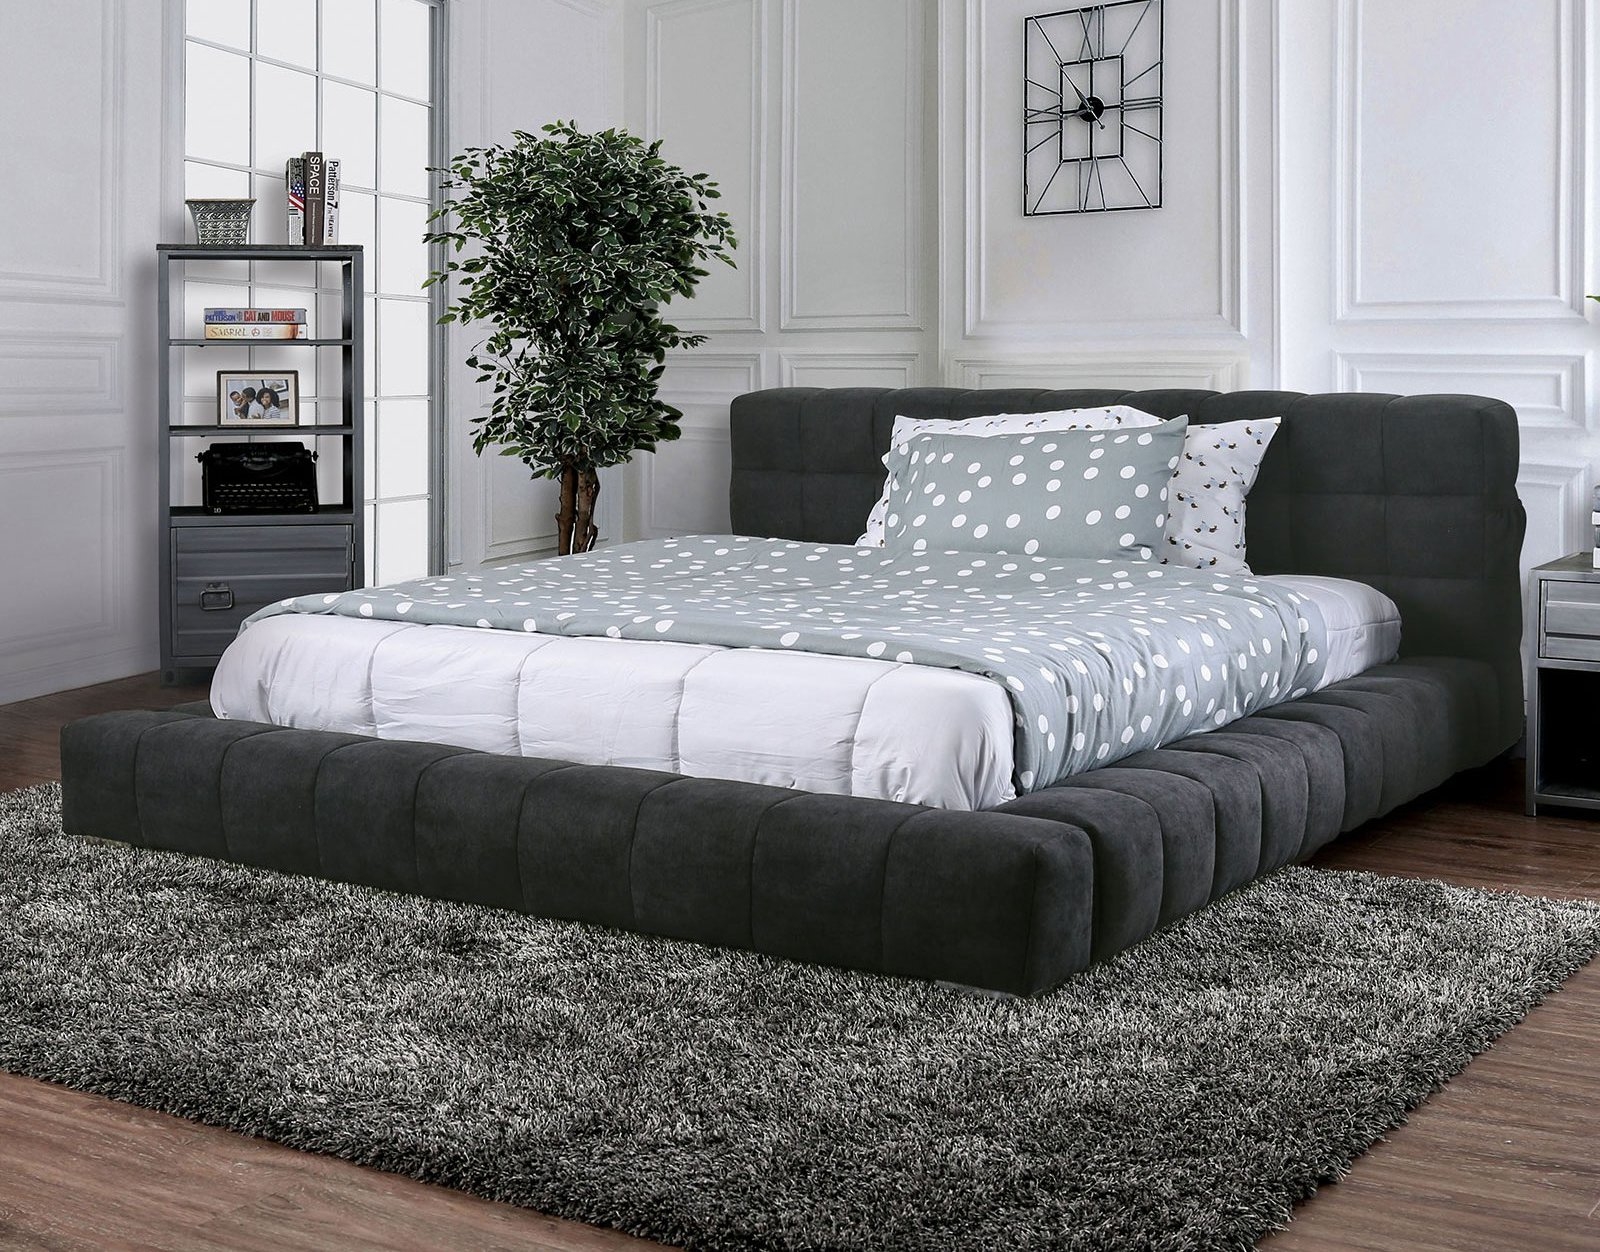 Furniture of America Wolsey King Size Bed CM7545EK